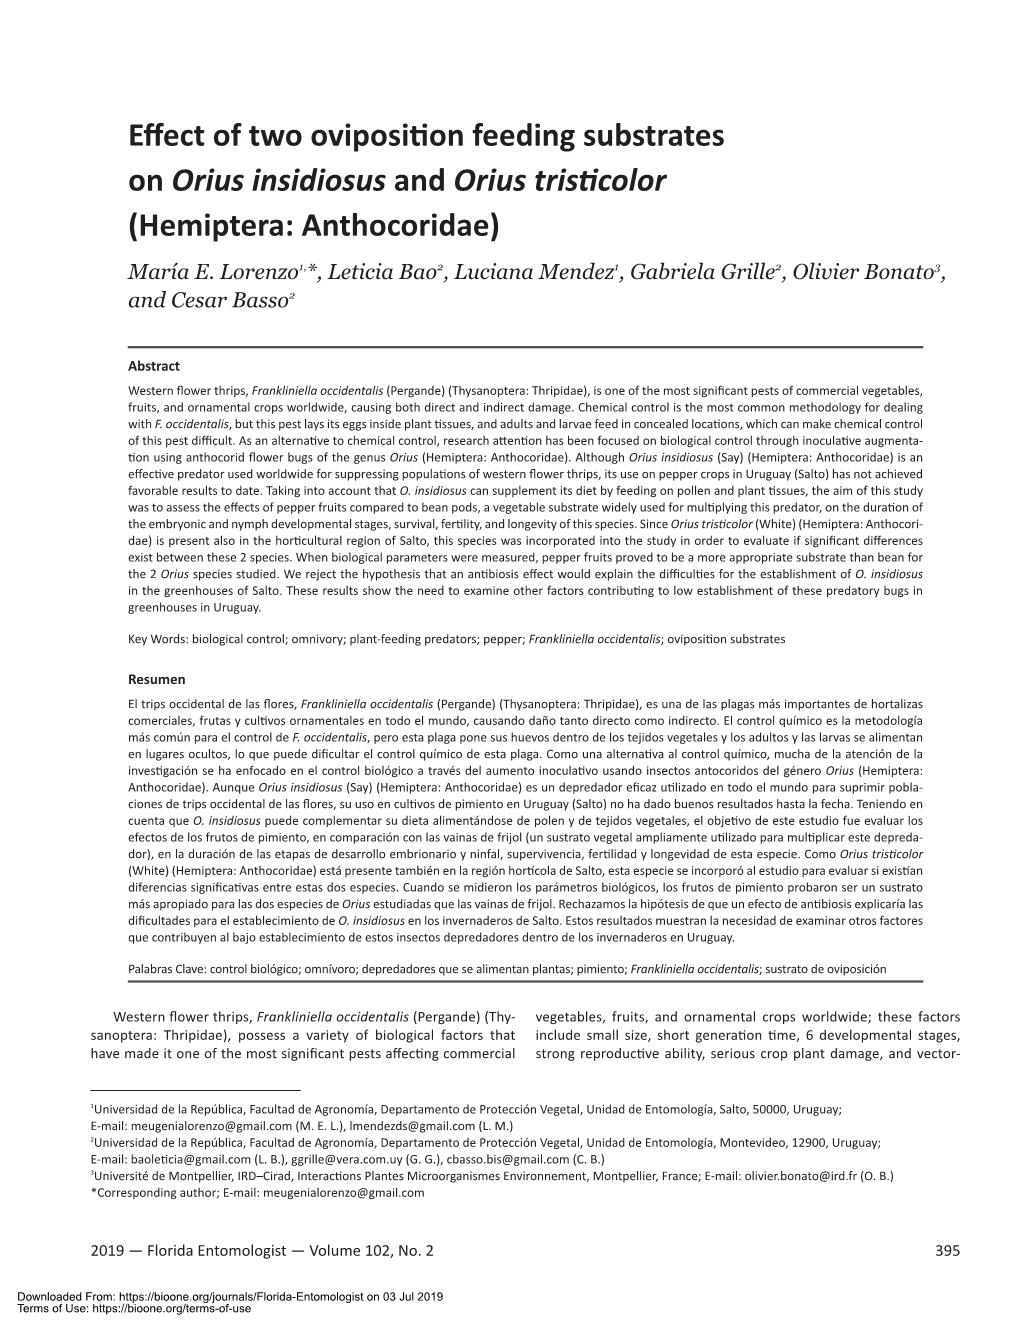 Effect of Two Oviposition Feeding Substrates on Orius Insidiosus and Orius Tristicolor (Hemiptera: Anthocoridae)